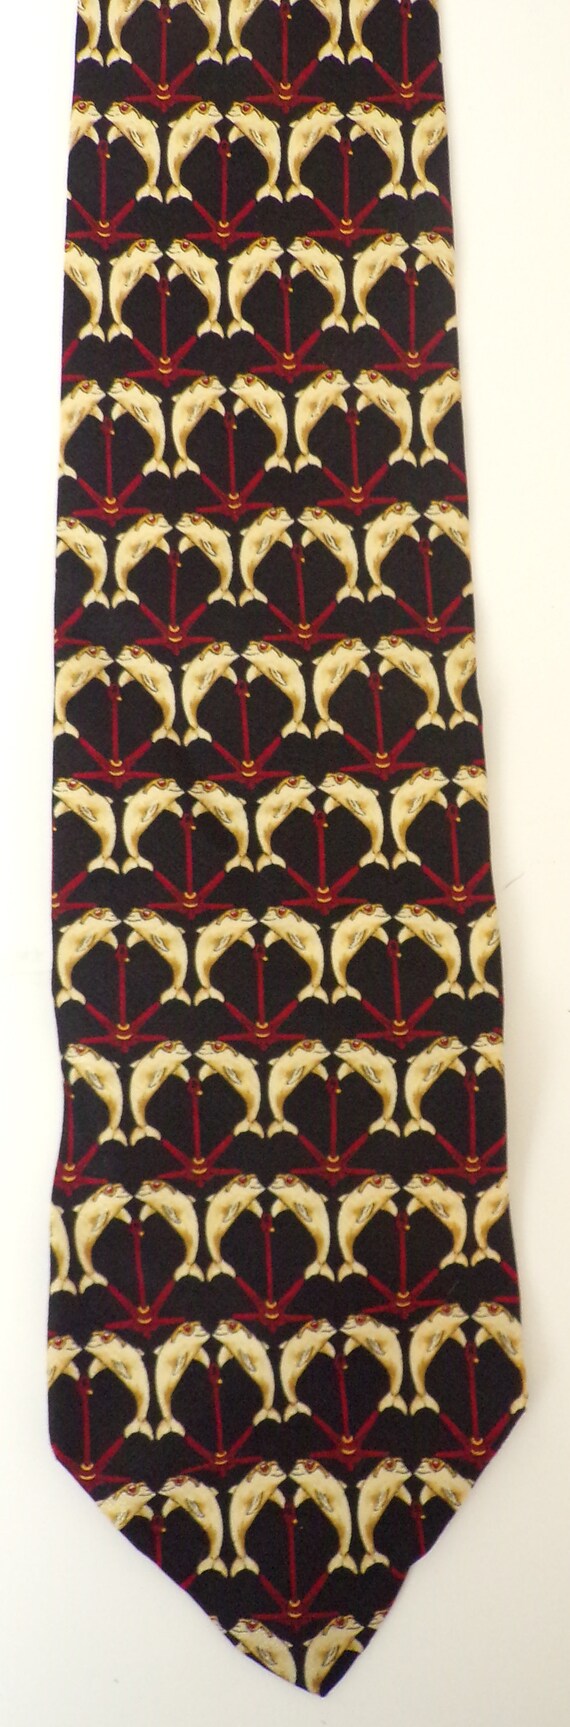 Vintage Fish Wearing Sunglasses Tie, Black Red & Gold… - Gem